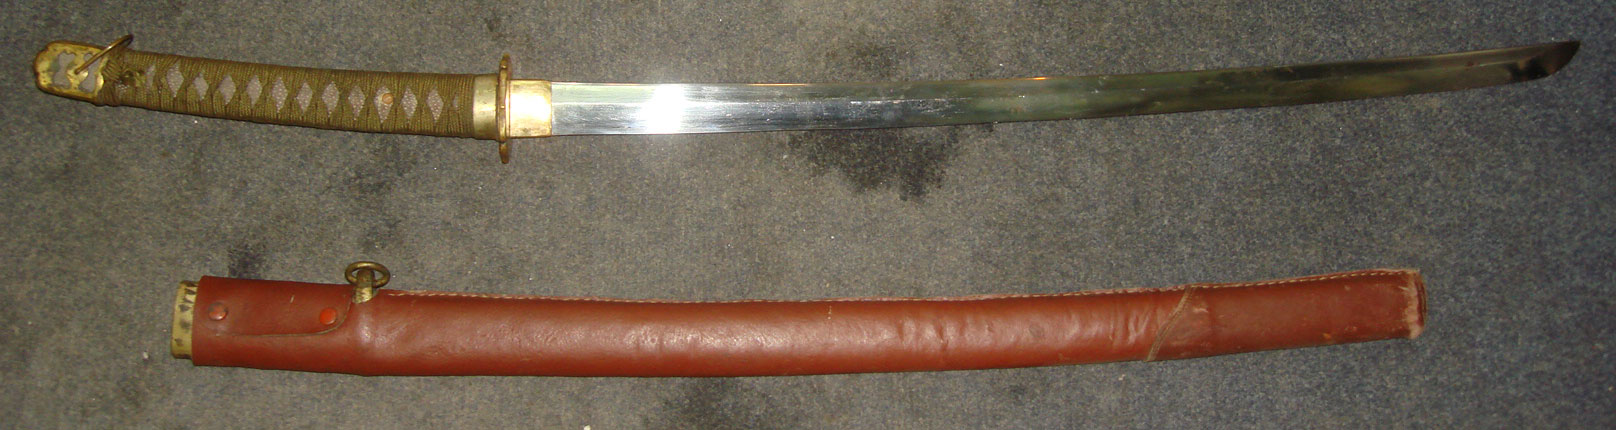 Японский офицерский меч "Катана", 1944 год